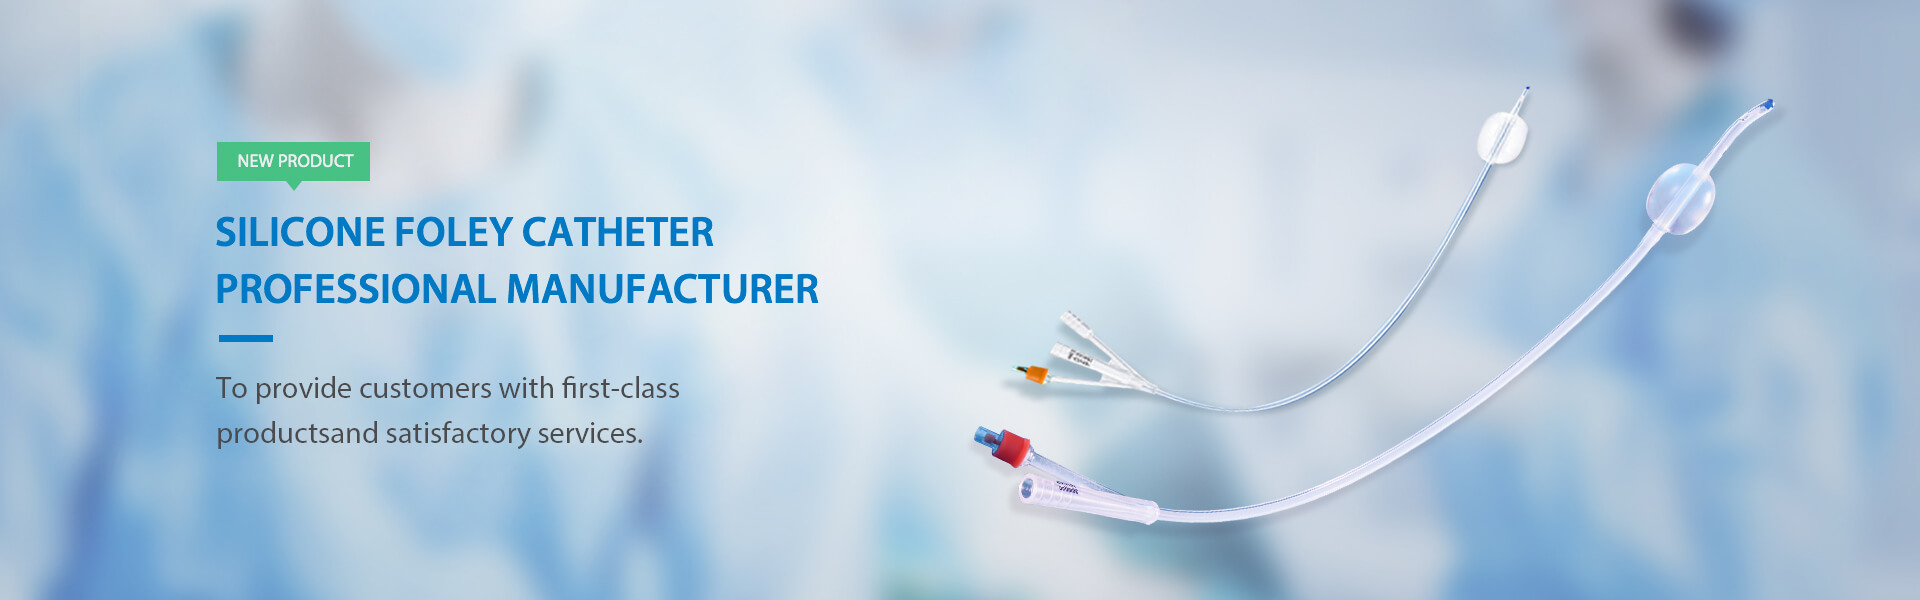 silicone foley catheter Professional manufacturer